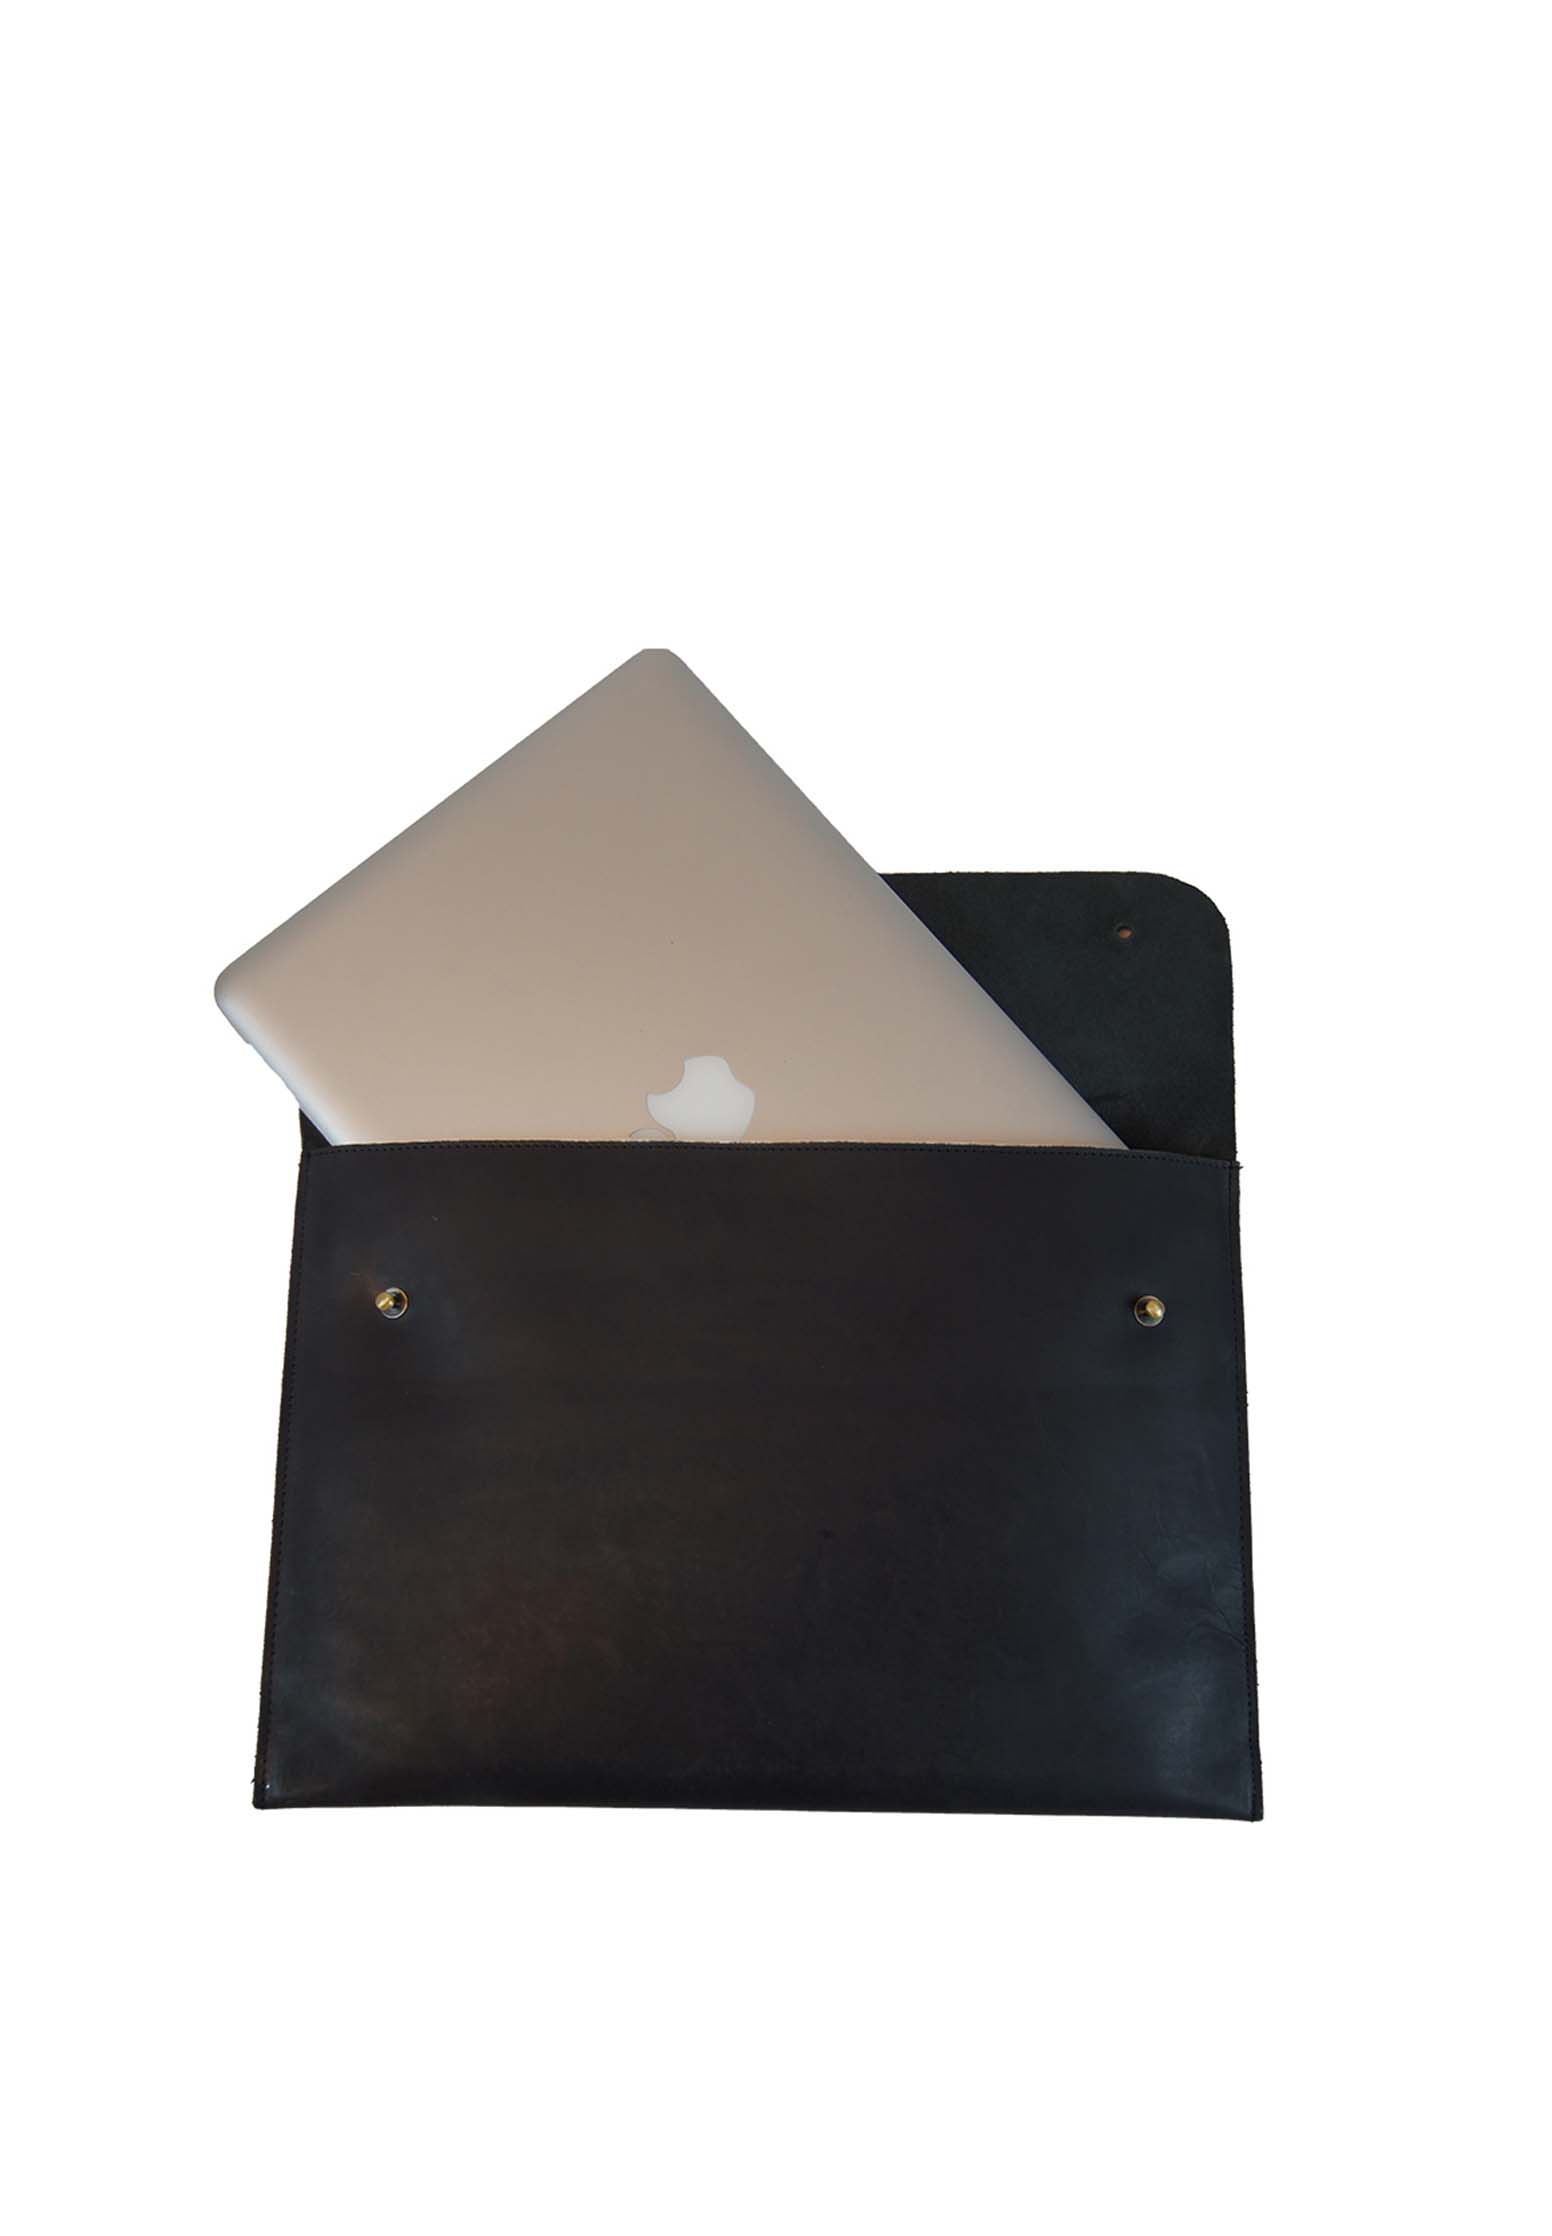 O MY BAG Laptop Sleeve 13" Hunter Leather black